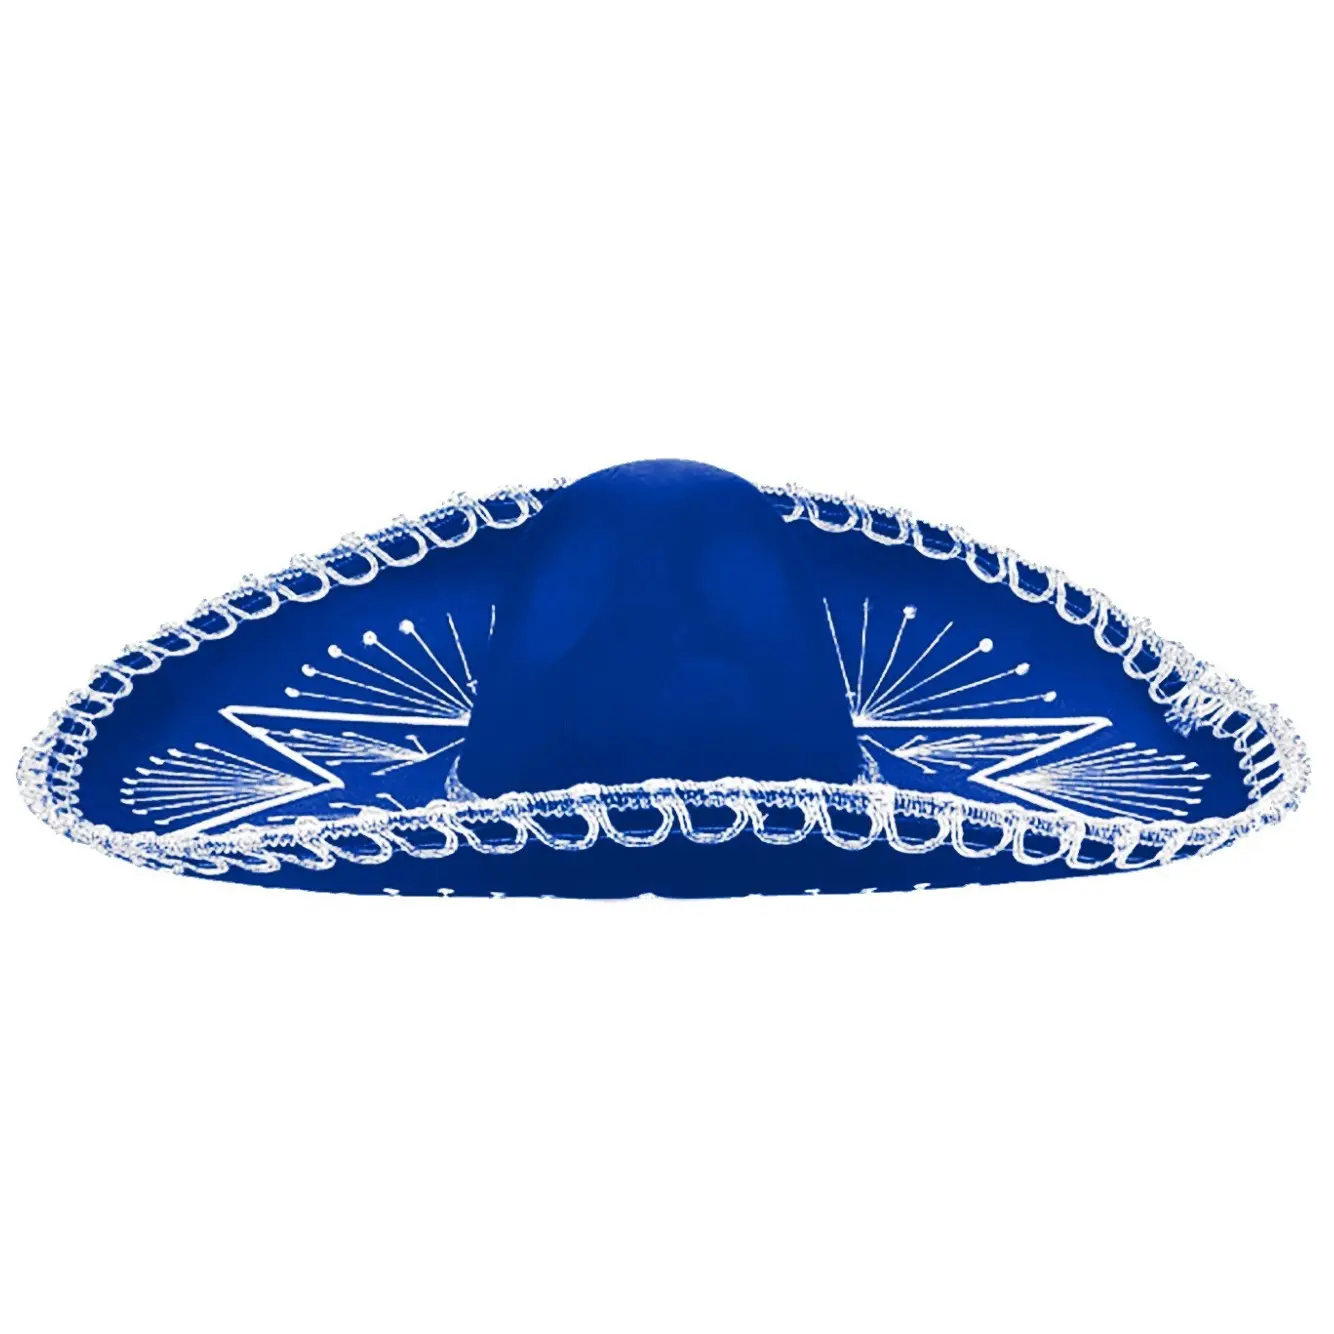 Sombrero con estampado o bordado personalizado para adultos, Sombrero para Halloween, Día de Acción de Gracias, fiesta de disfraces, Sombrero de carga mexicana